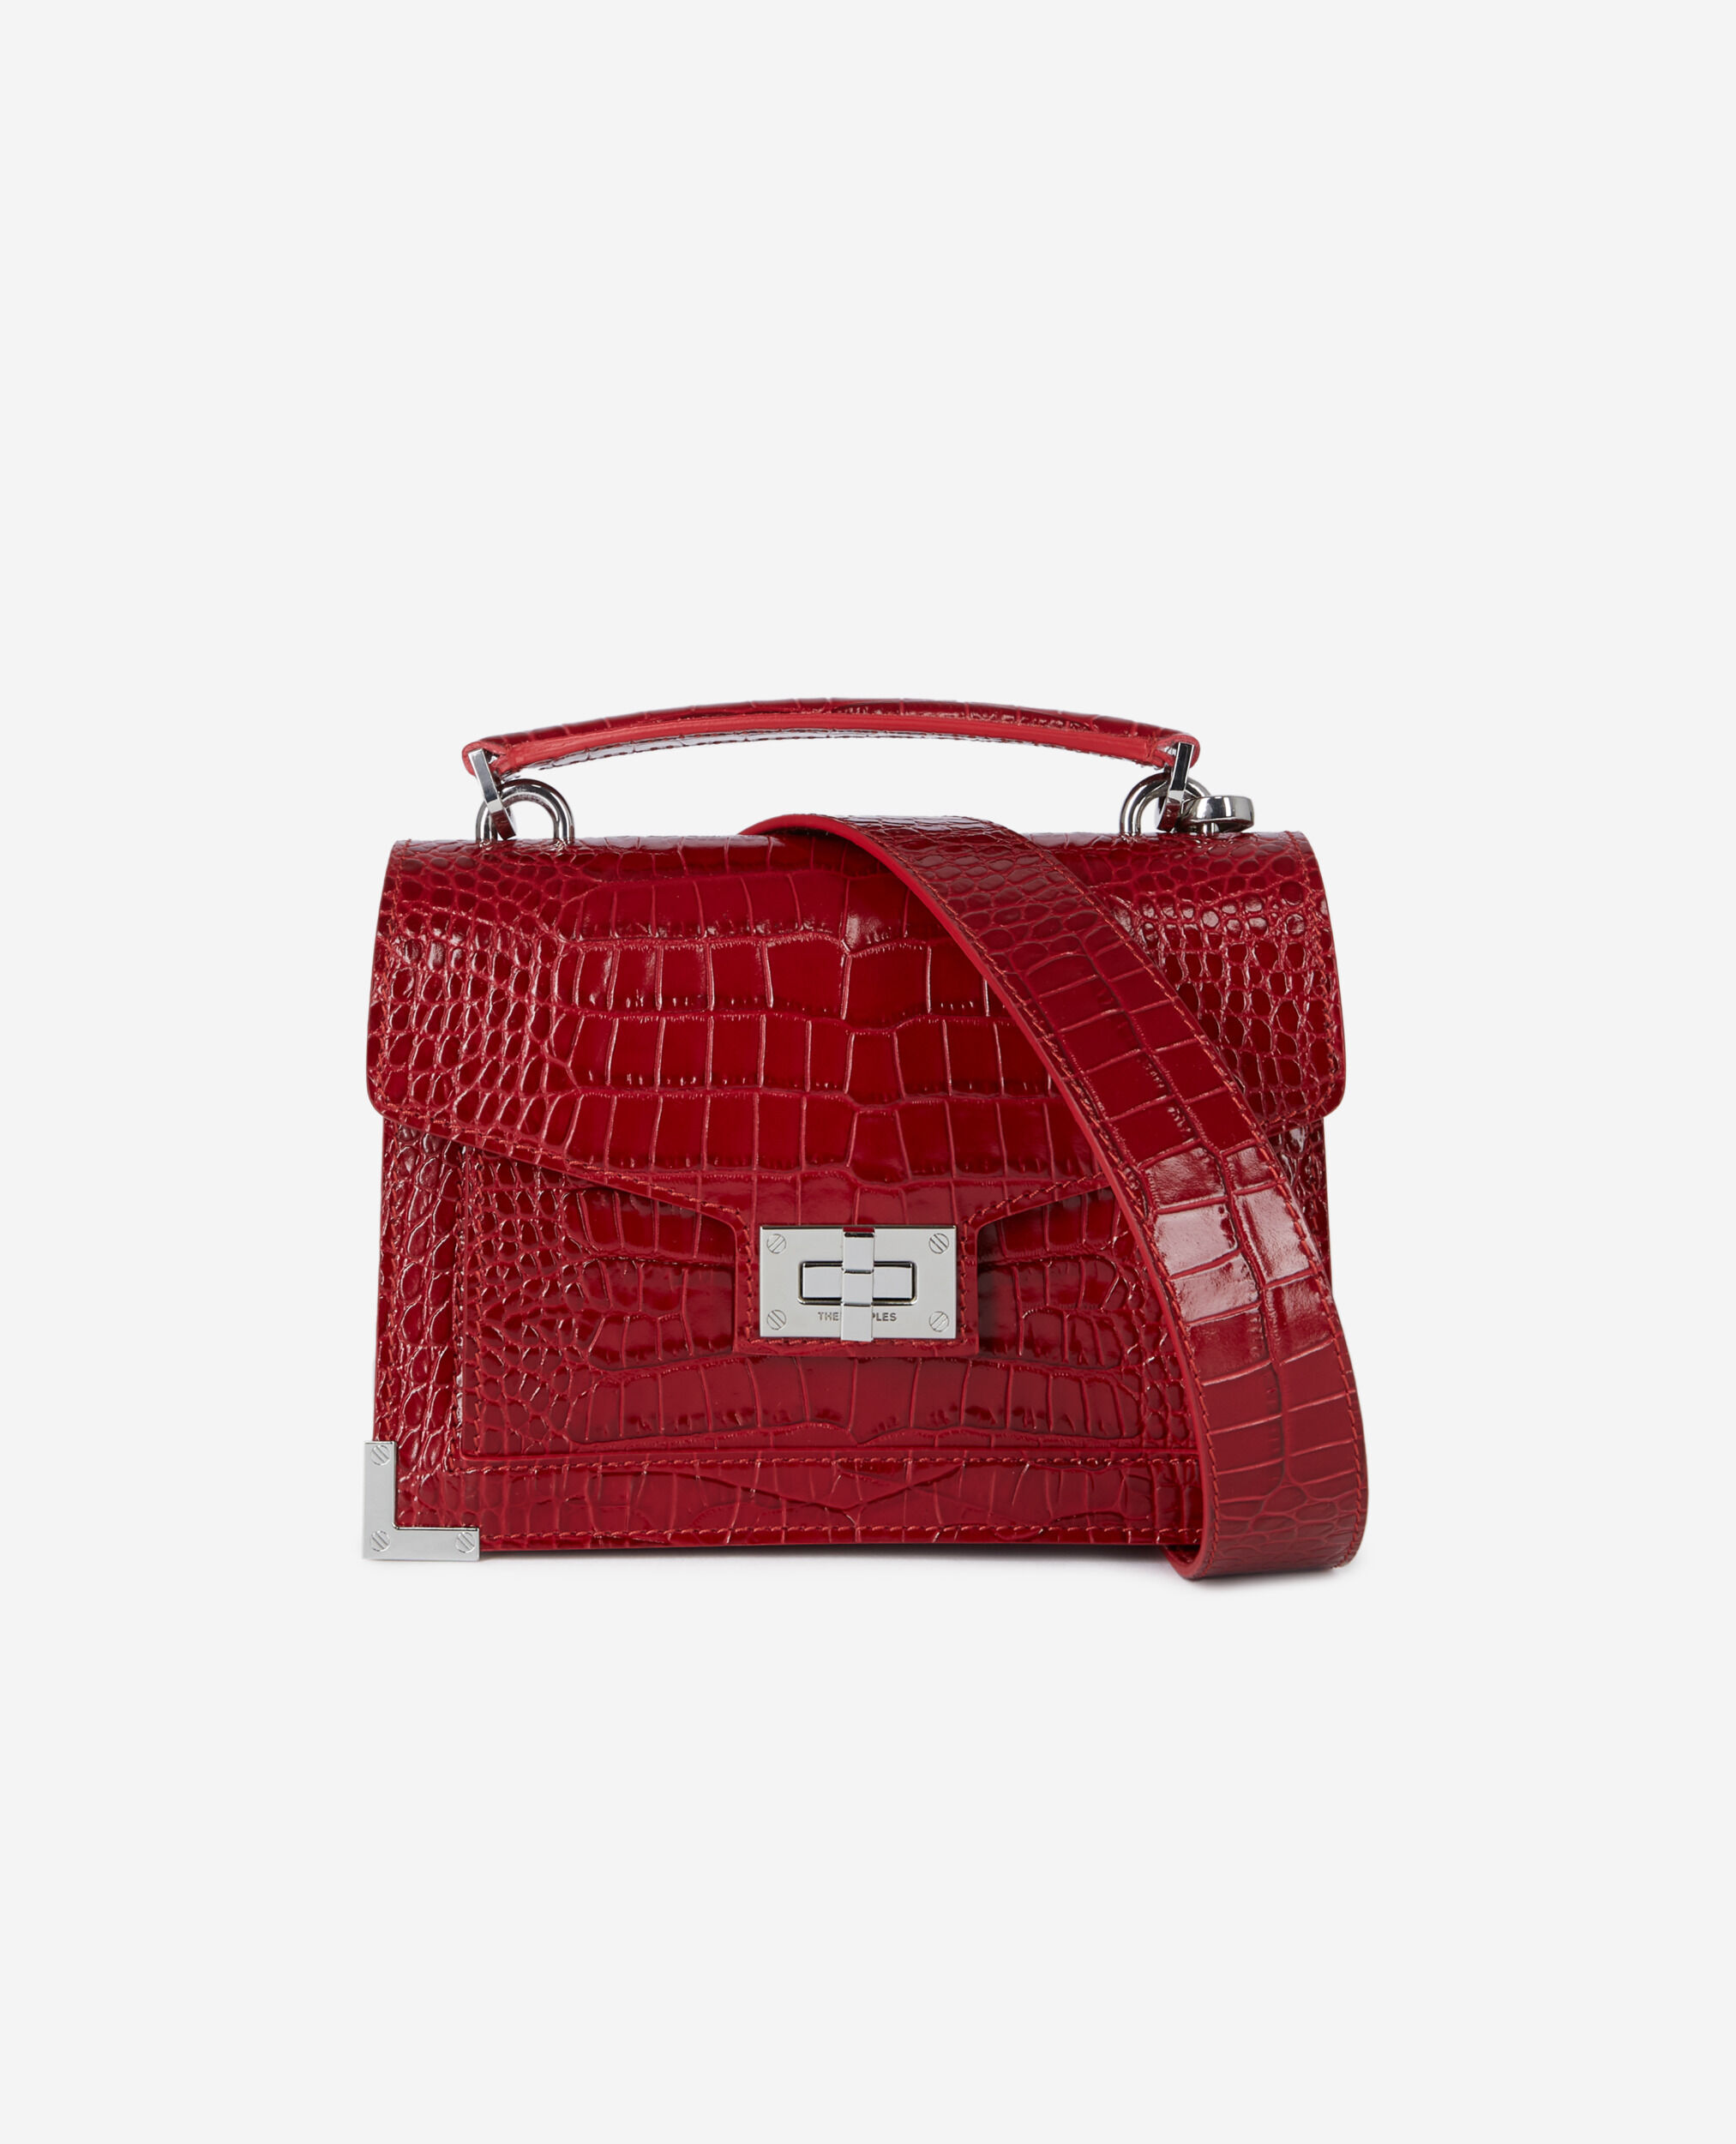 The Kooples Barbara Red Croco Leather Handbag Brand New RRP $430 7x5.5x2.5